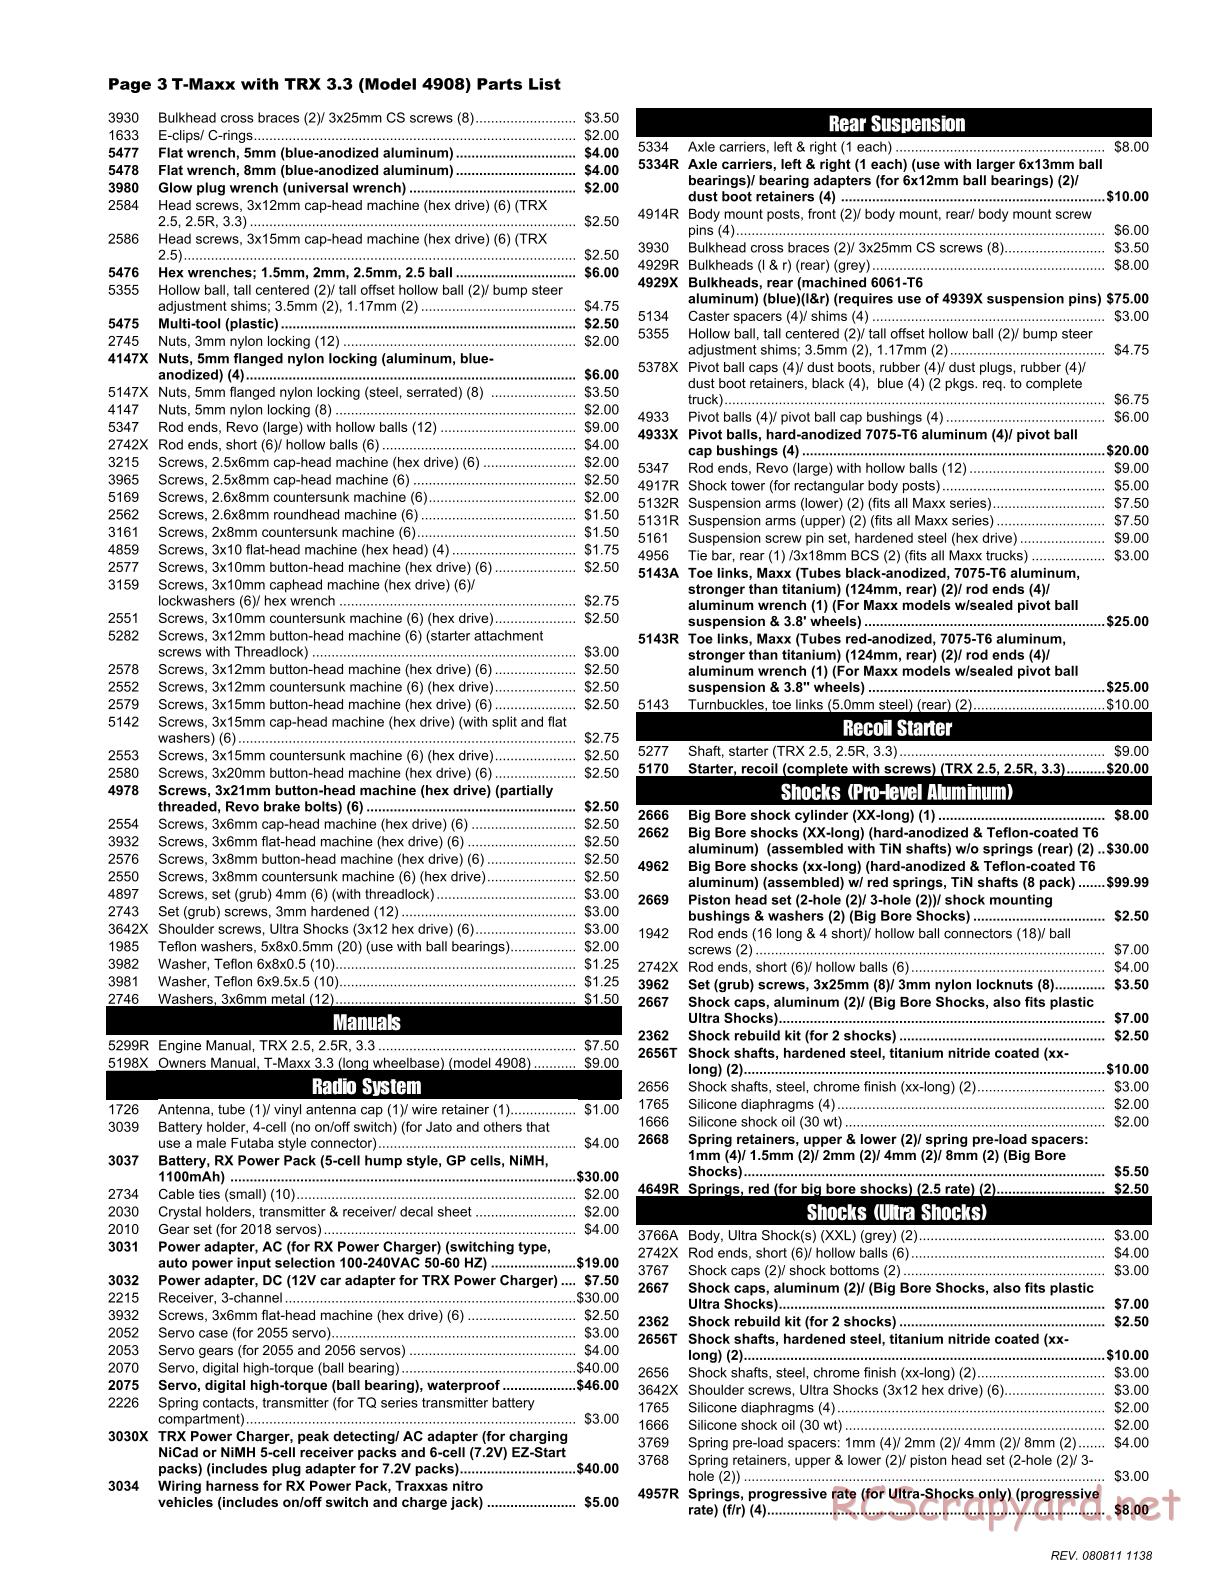 Traxxas - T-Maxx 3.3 (2008) - Parts List - Page 3